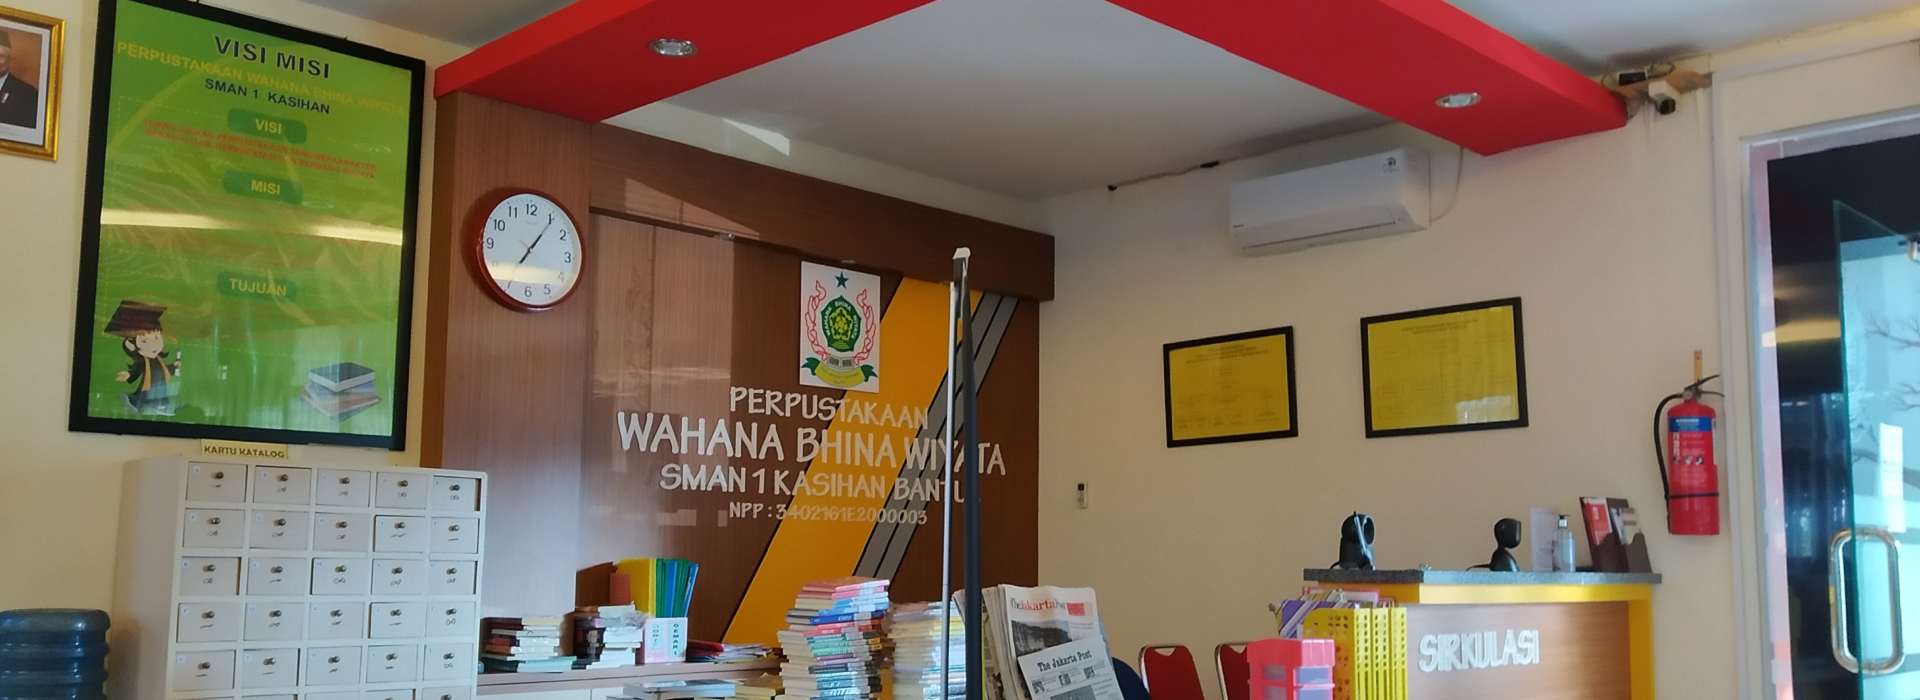 Perpustakaan Wahana Bhina Wiyata